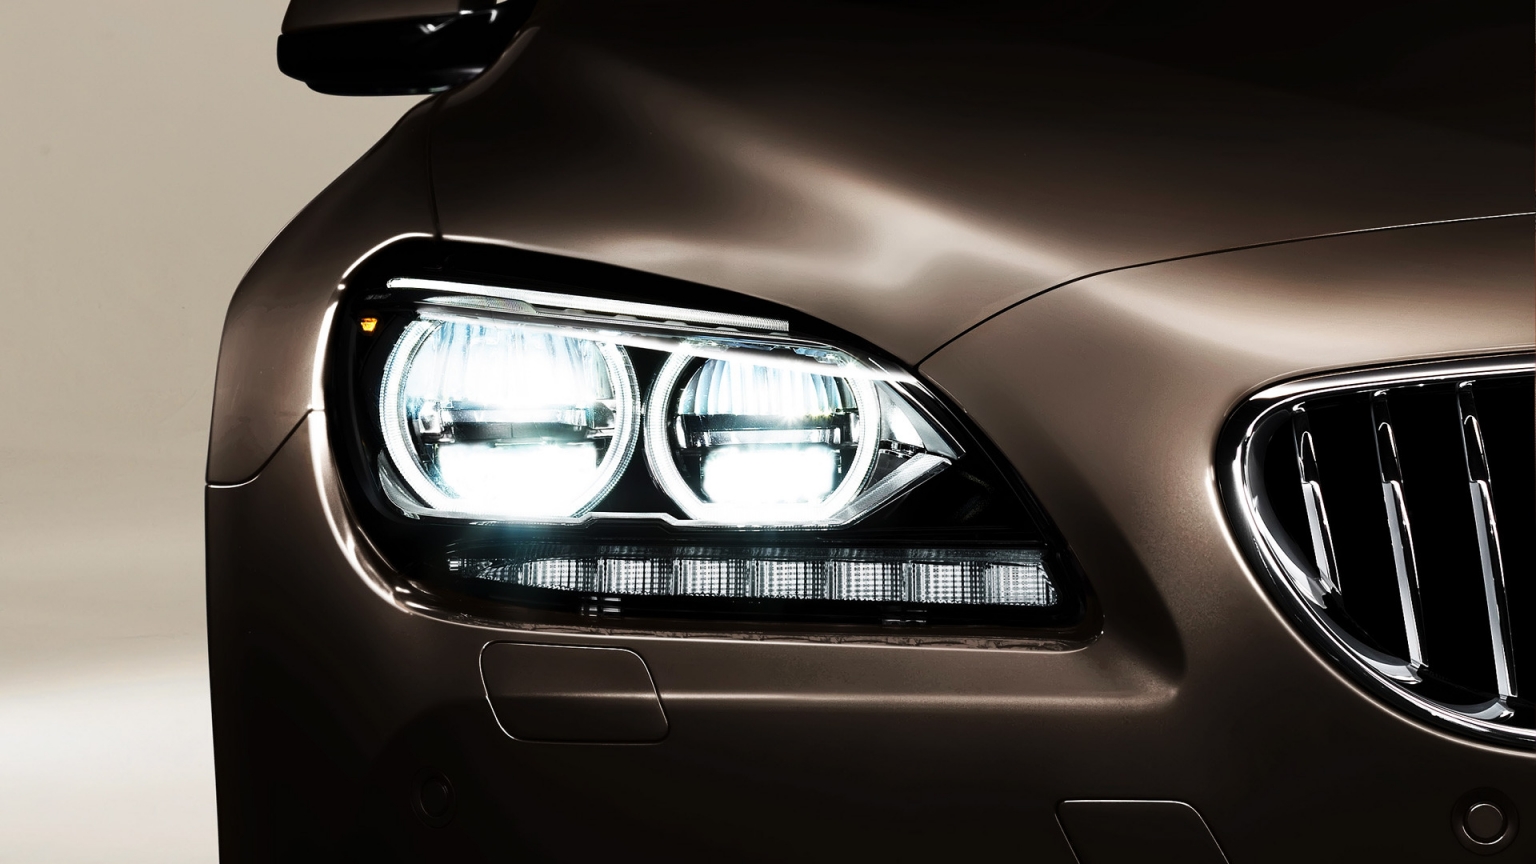 BMW 6 Series 2013 Headlight for 1536 x 864 HDTV resolution